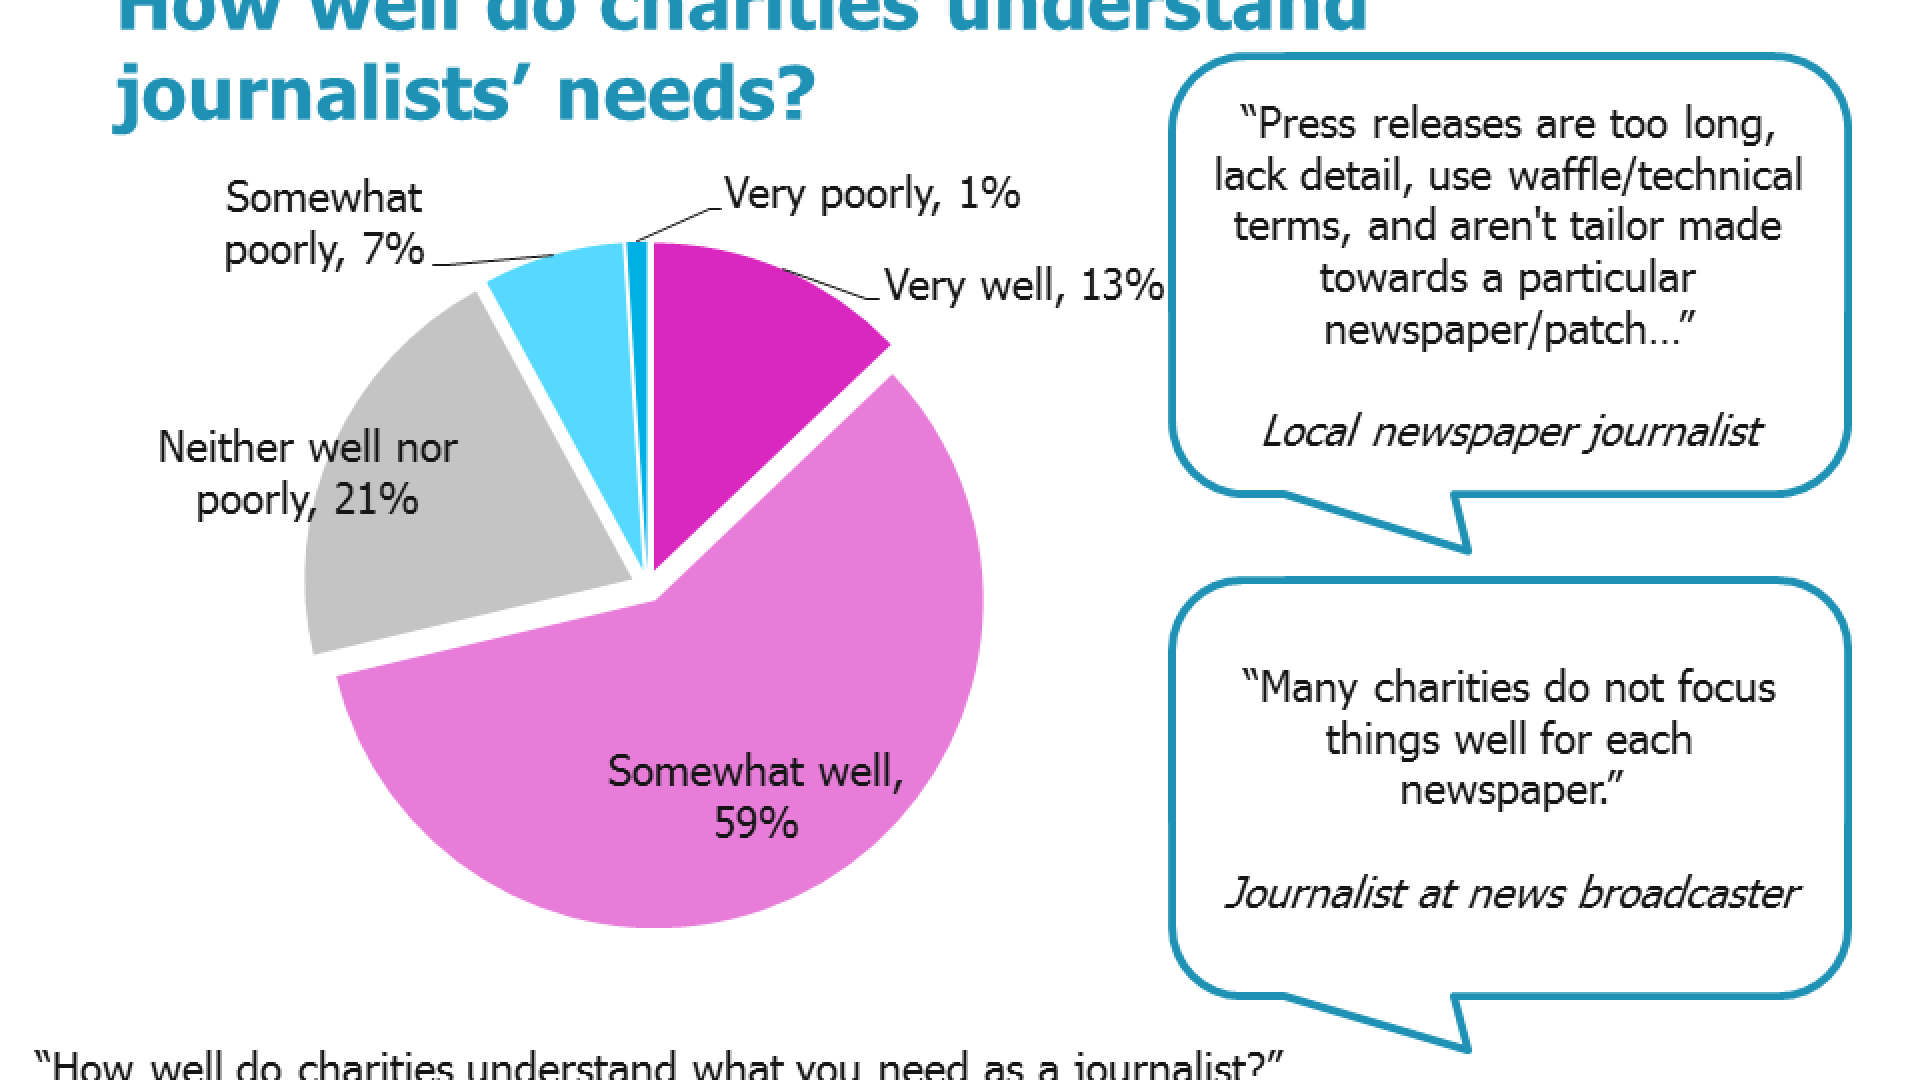 Pie chart showing how well charities understand journalists' needs